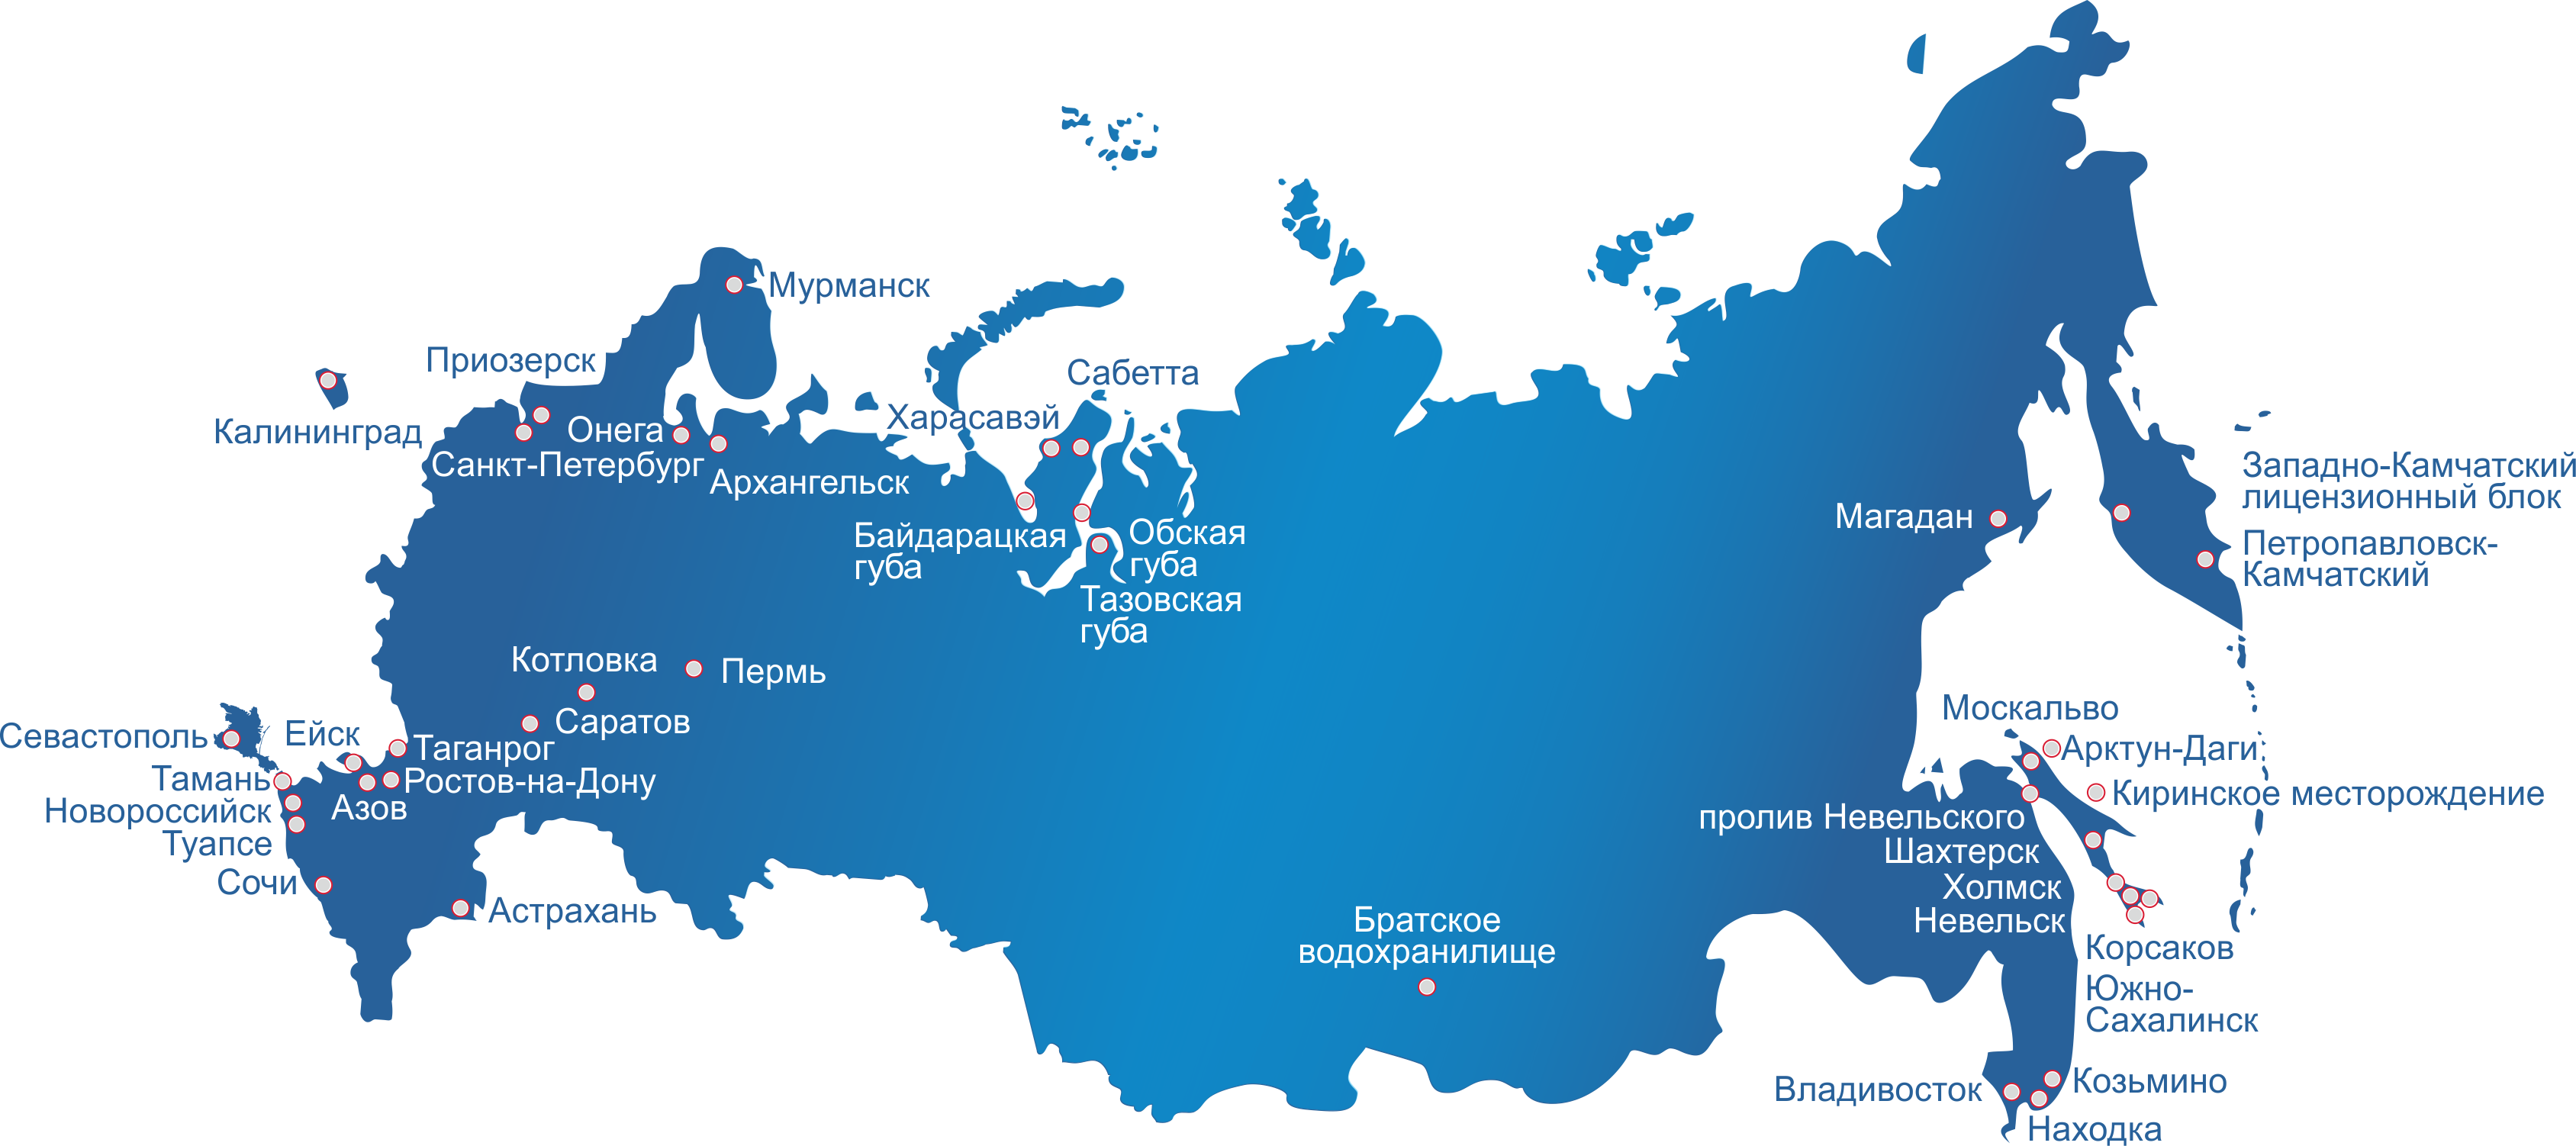 Сабетта на карте. Сабетта на карте России. Карта России Санкт Петербург Москва и Сочи. Карта России с городами Москва и Санкт-Петербург.